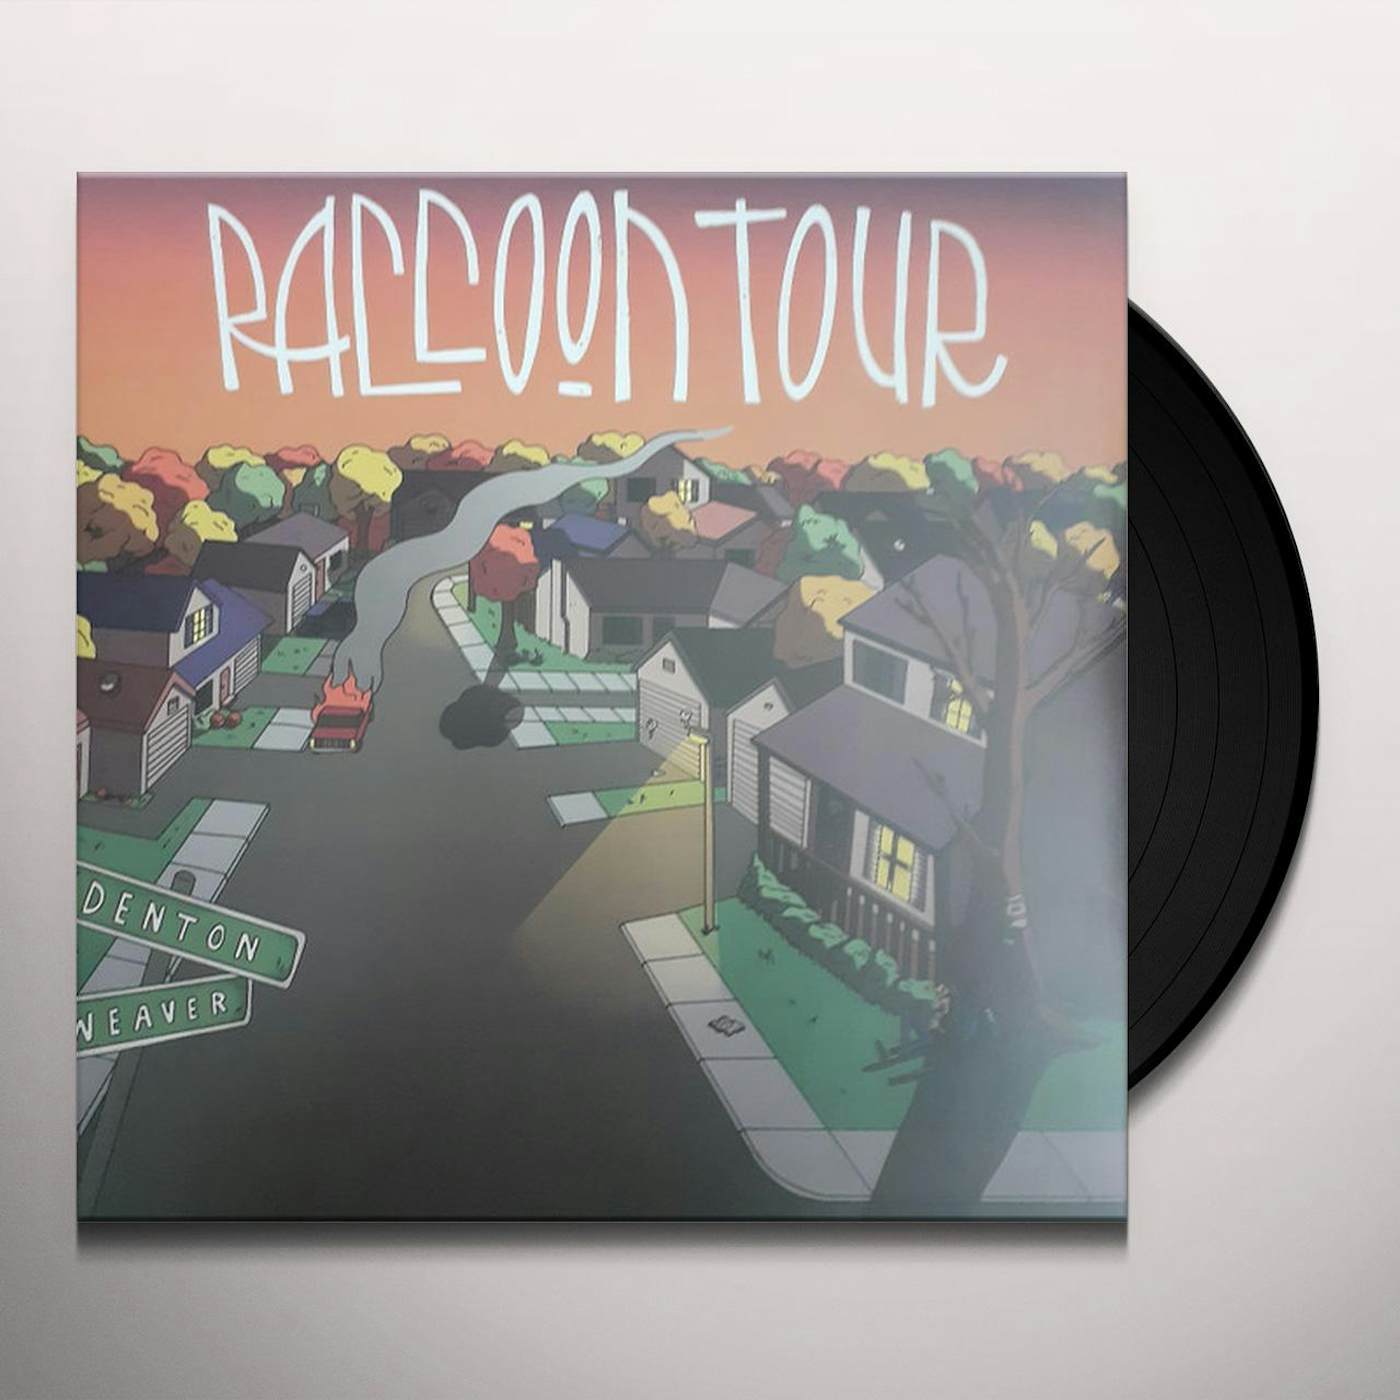 raccoon tour vinyl